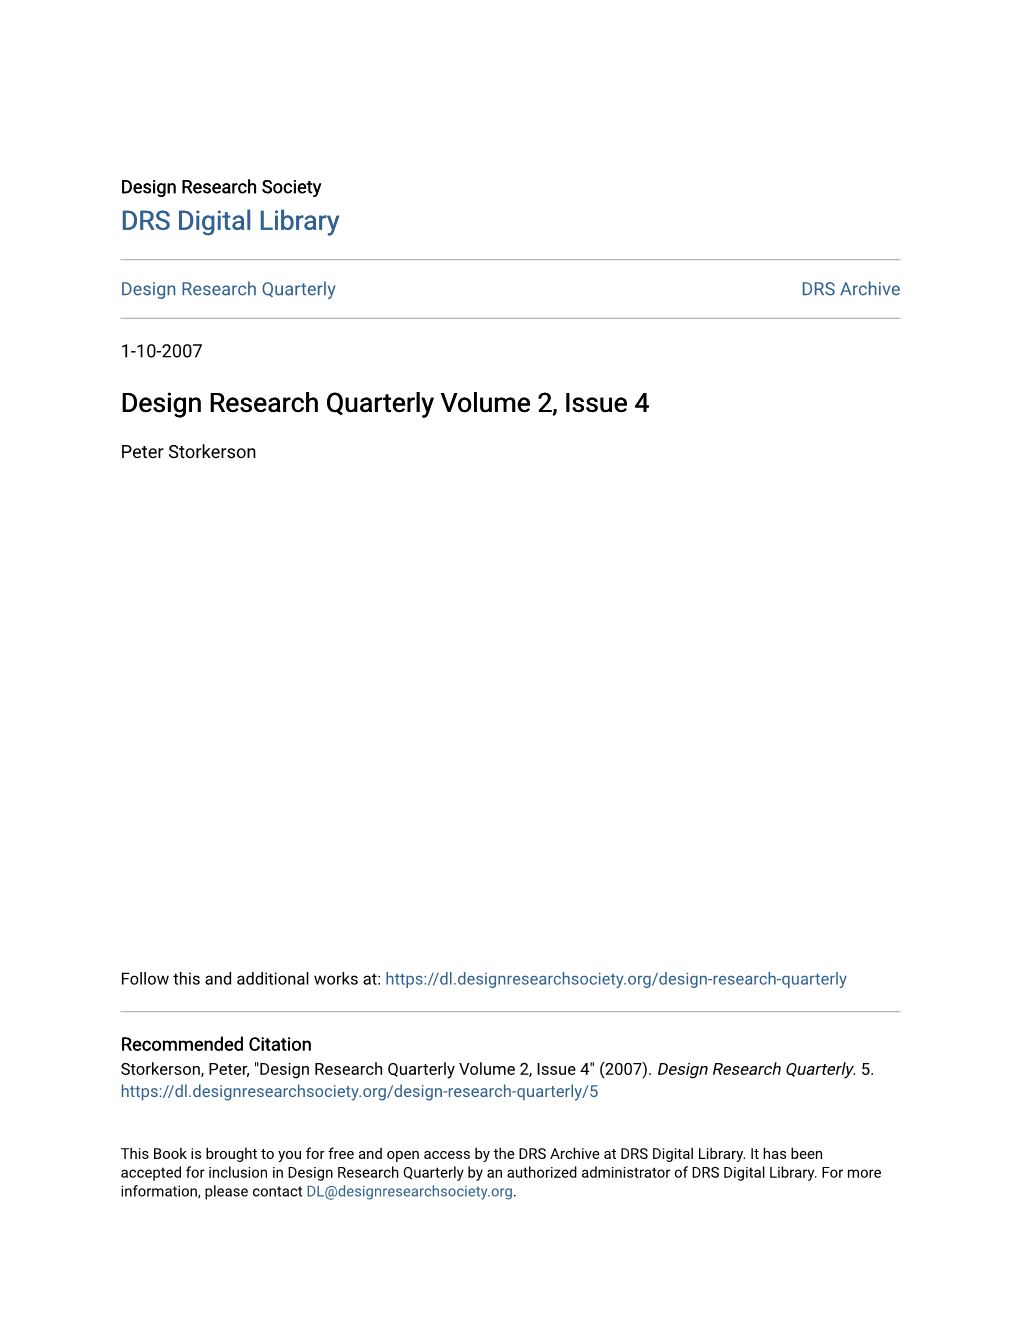 Design Research Quarterly Volume 2, Issue 4